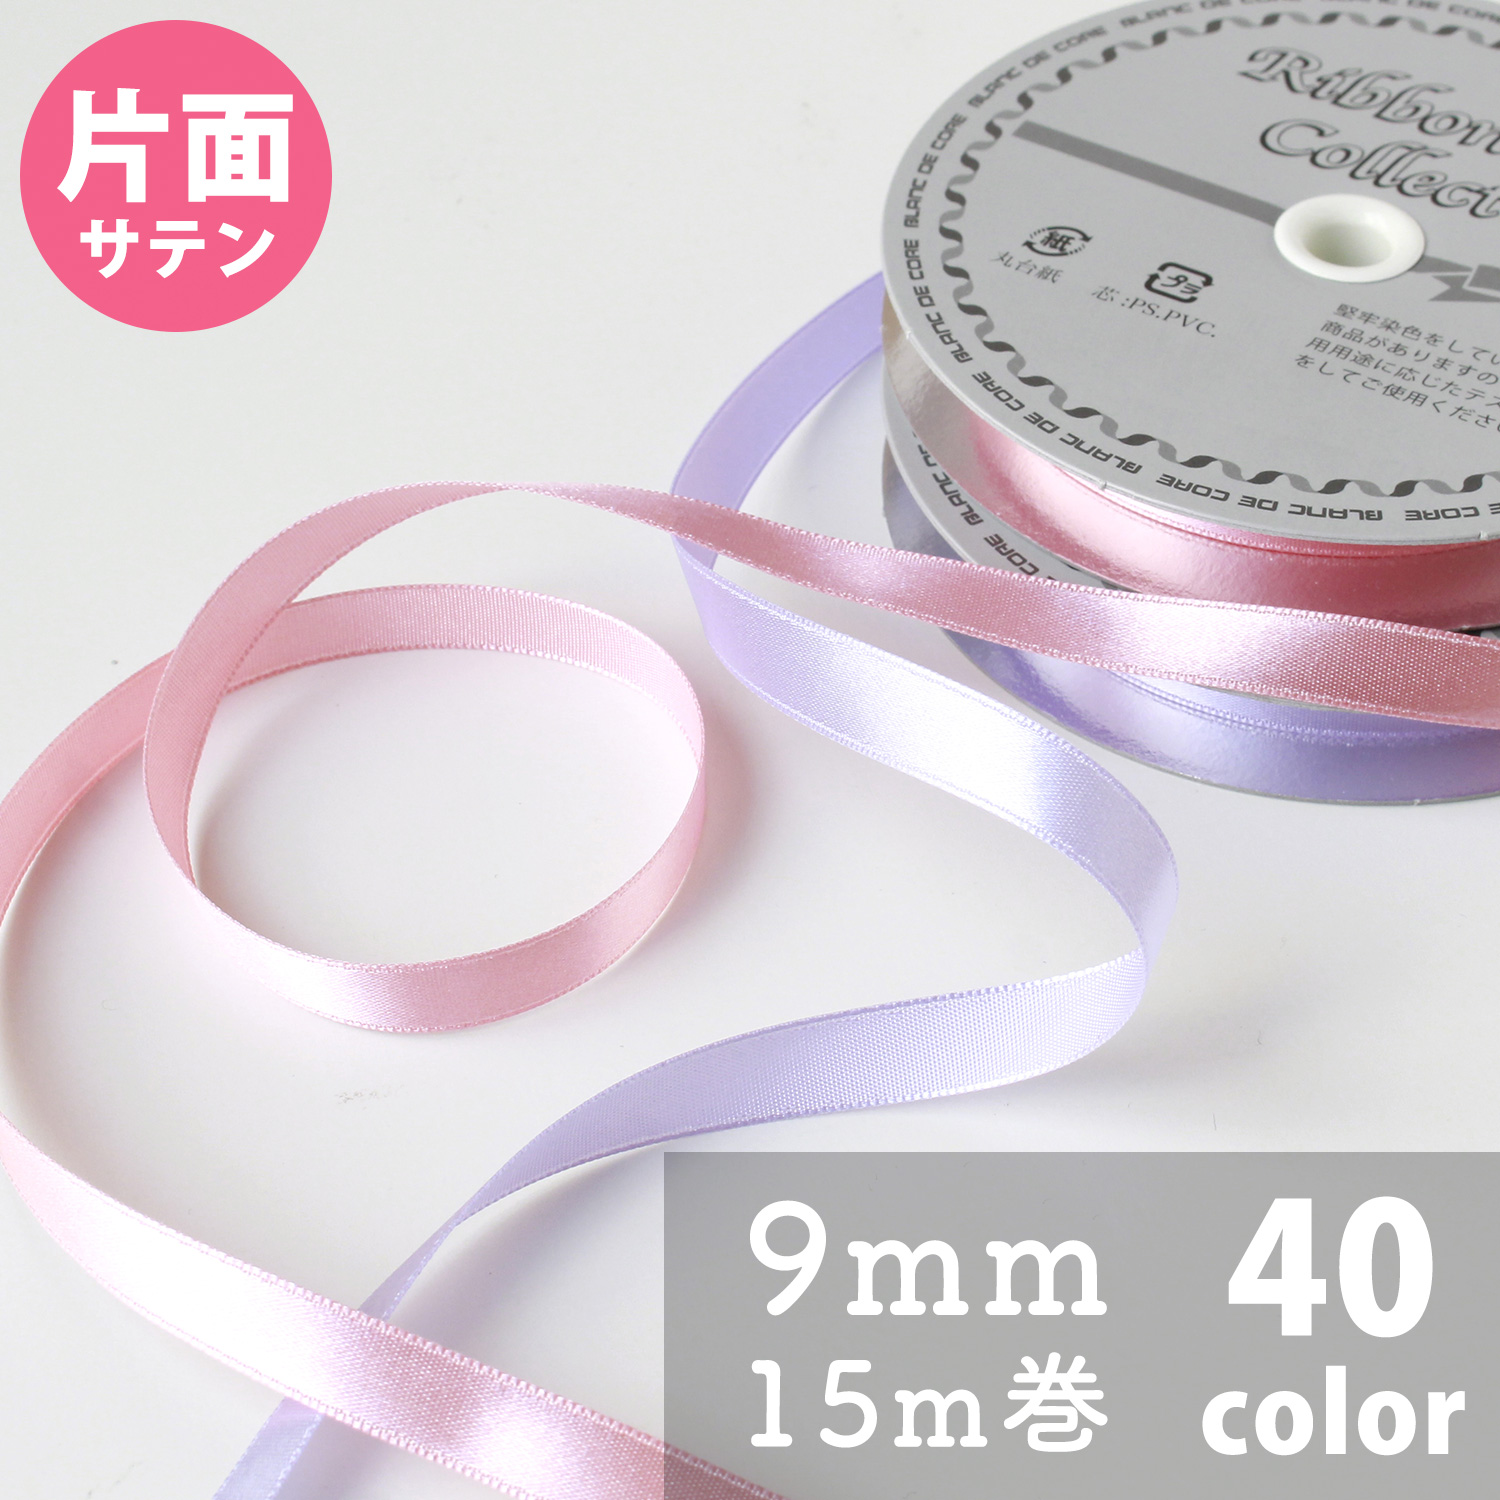 N One-sided Satin Ribbon 9mm width 15m (roll)